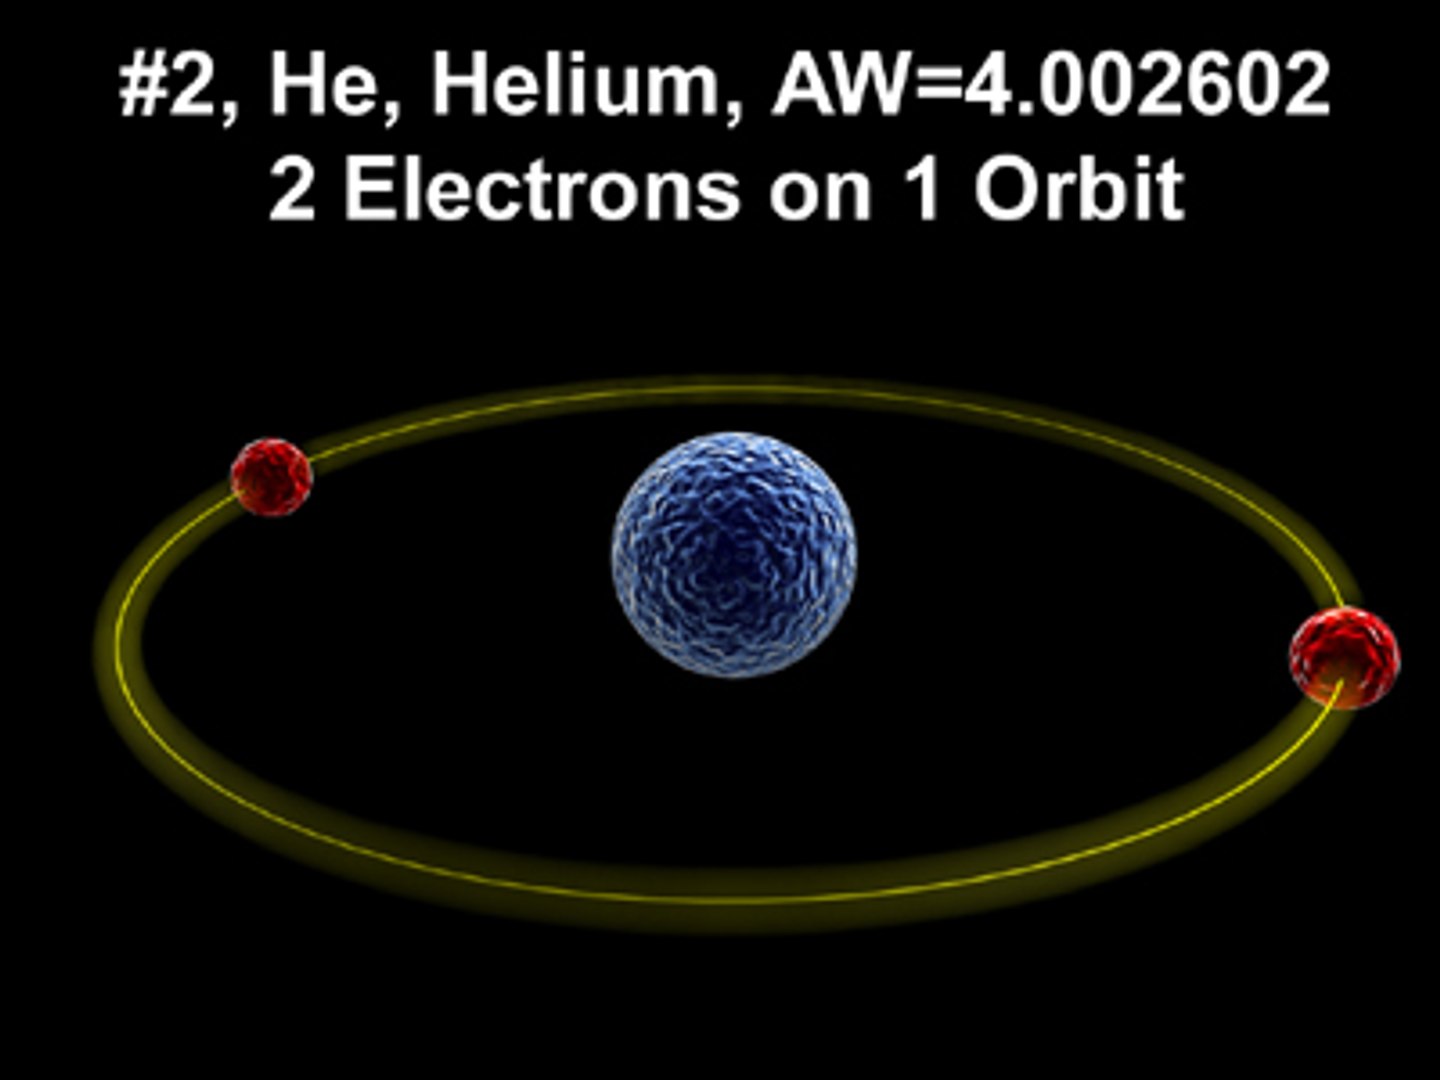 chlorine bohr model solar system